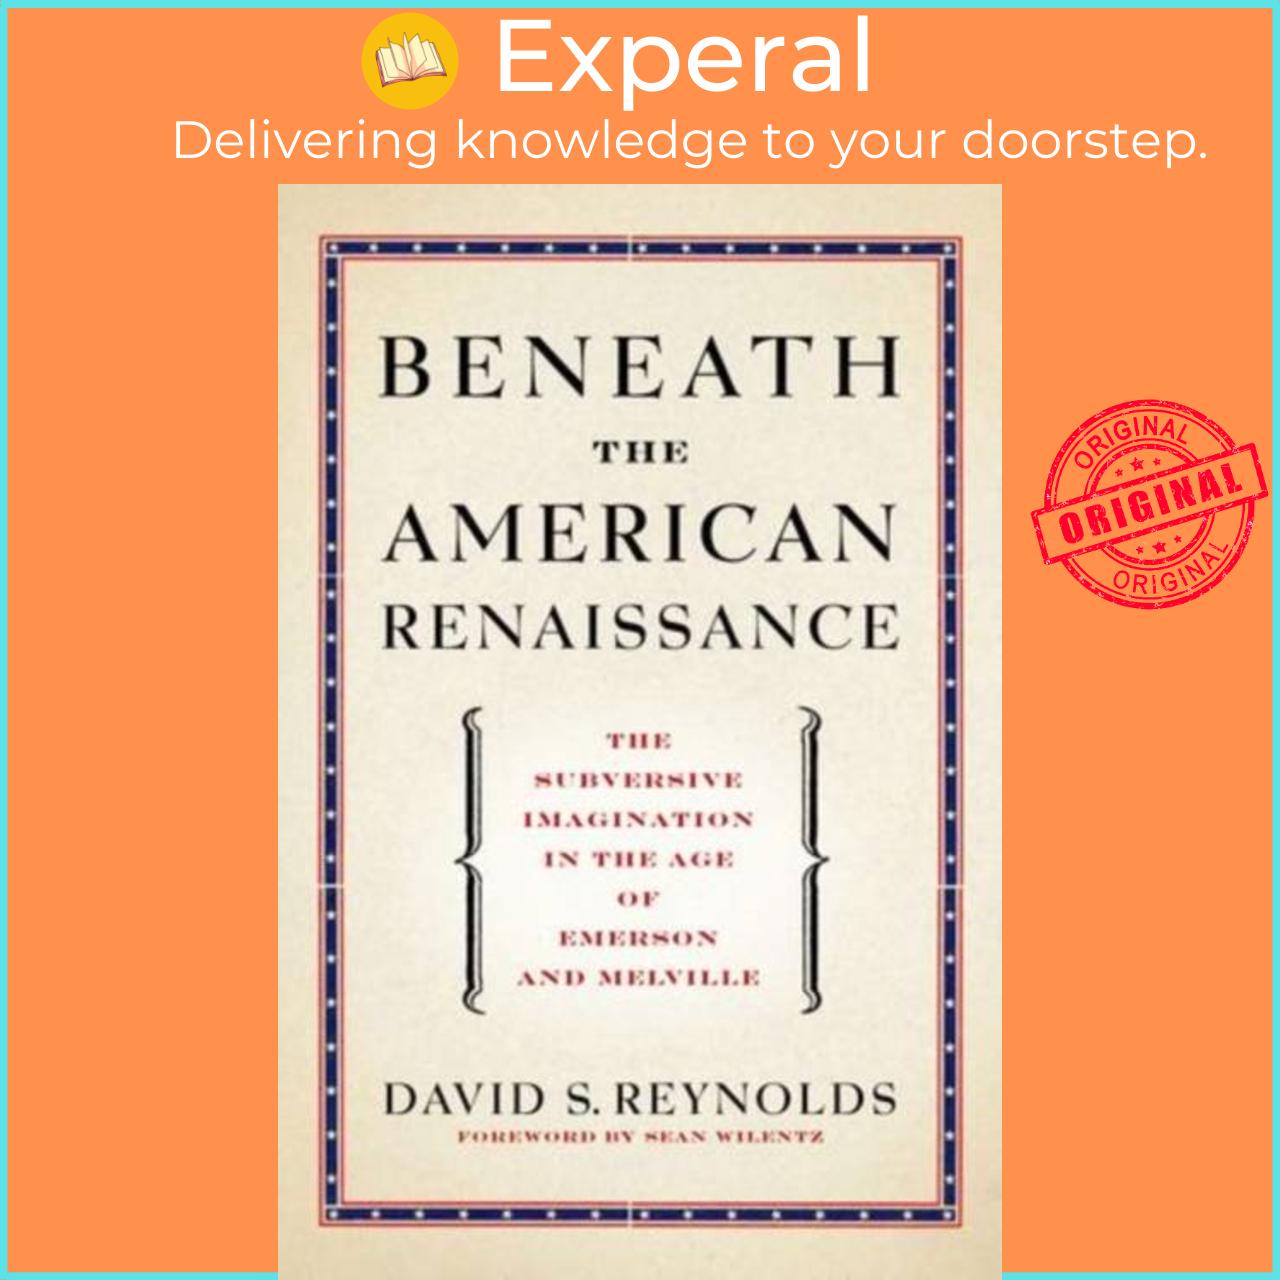 Hình ảnh Sách - Beneath the American Renaissance - The Subversive Imagination in the by David S. Reynolds (UK edition, paperback)